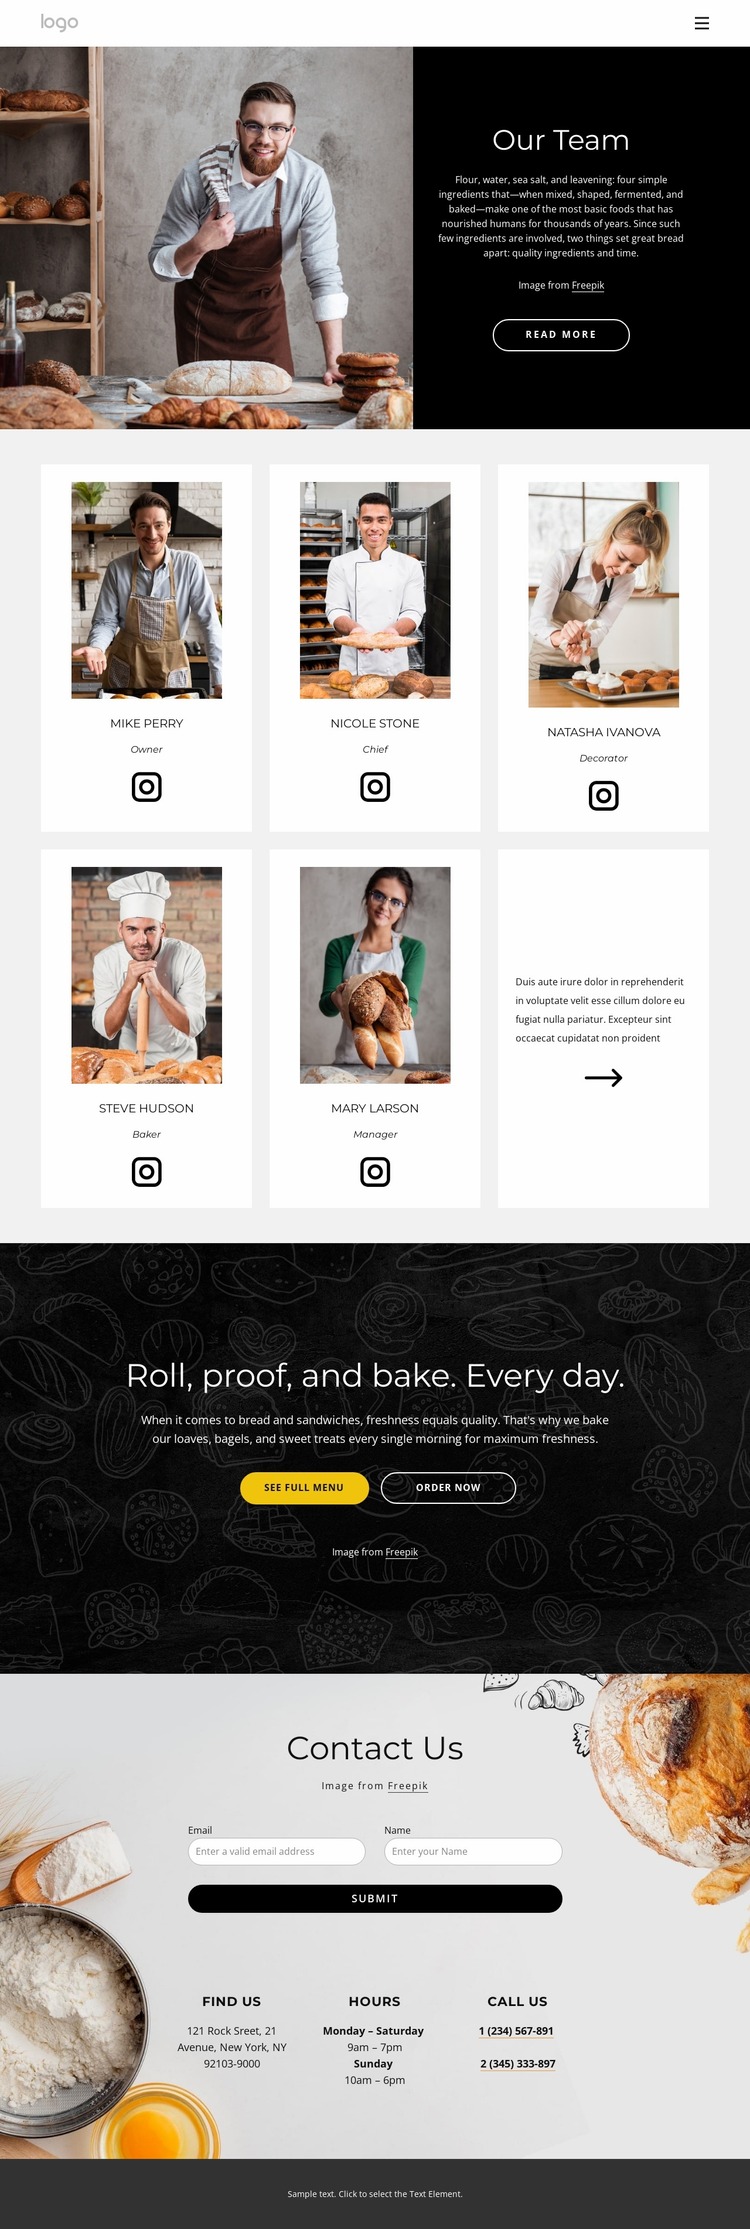 Bread bakers Website Mockup